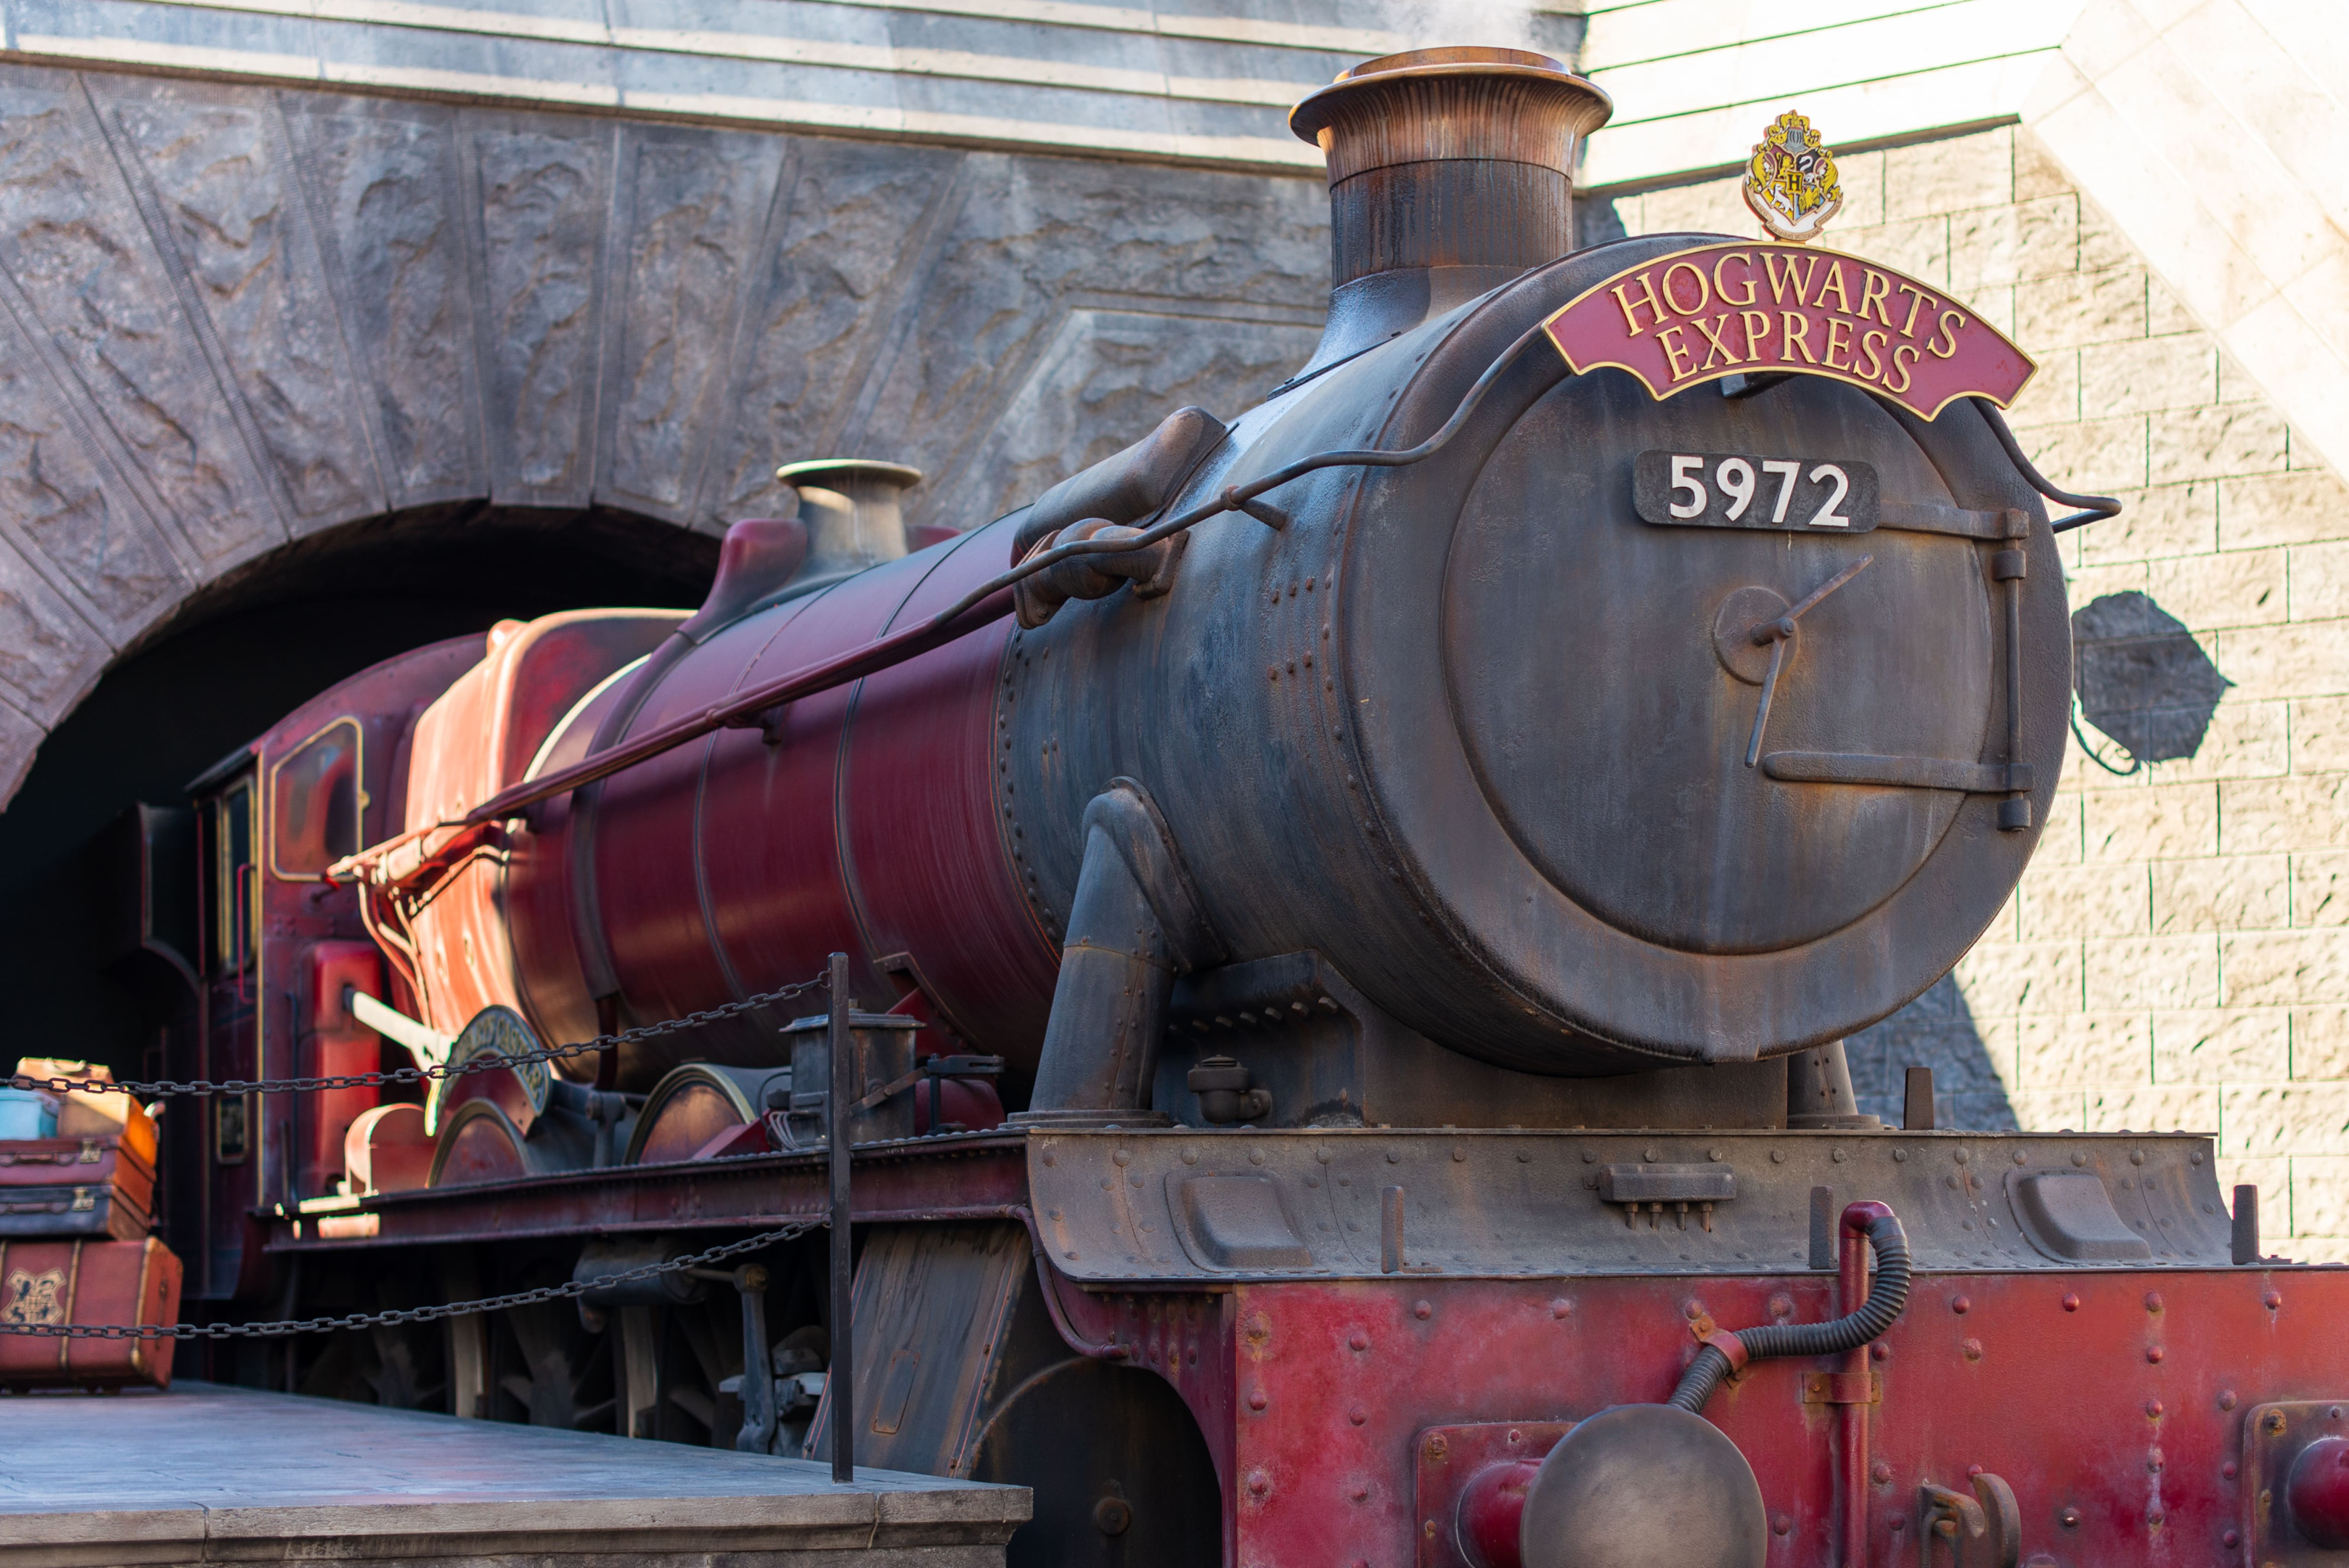 Hogwarts Express stream train